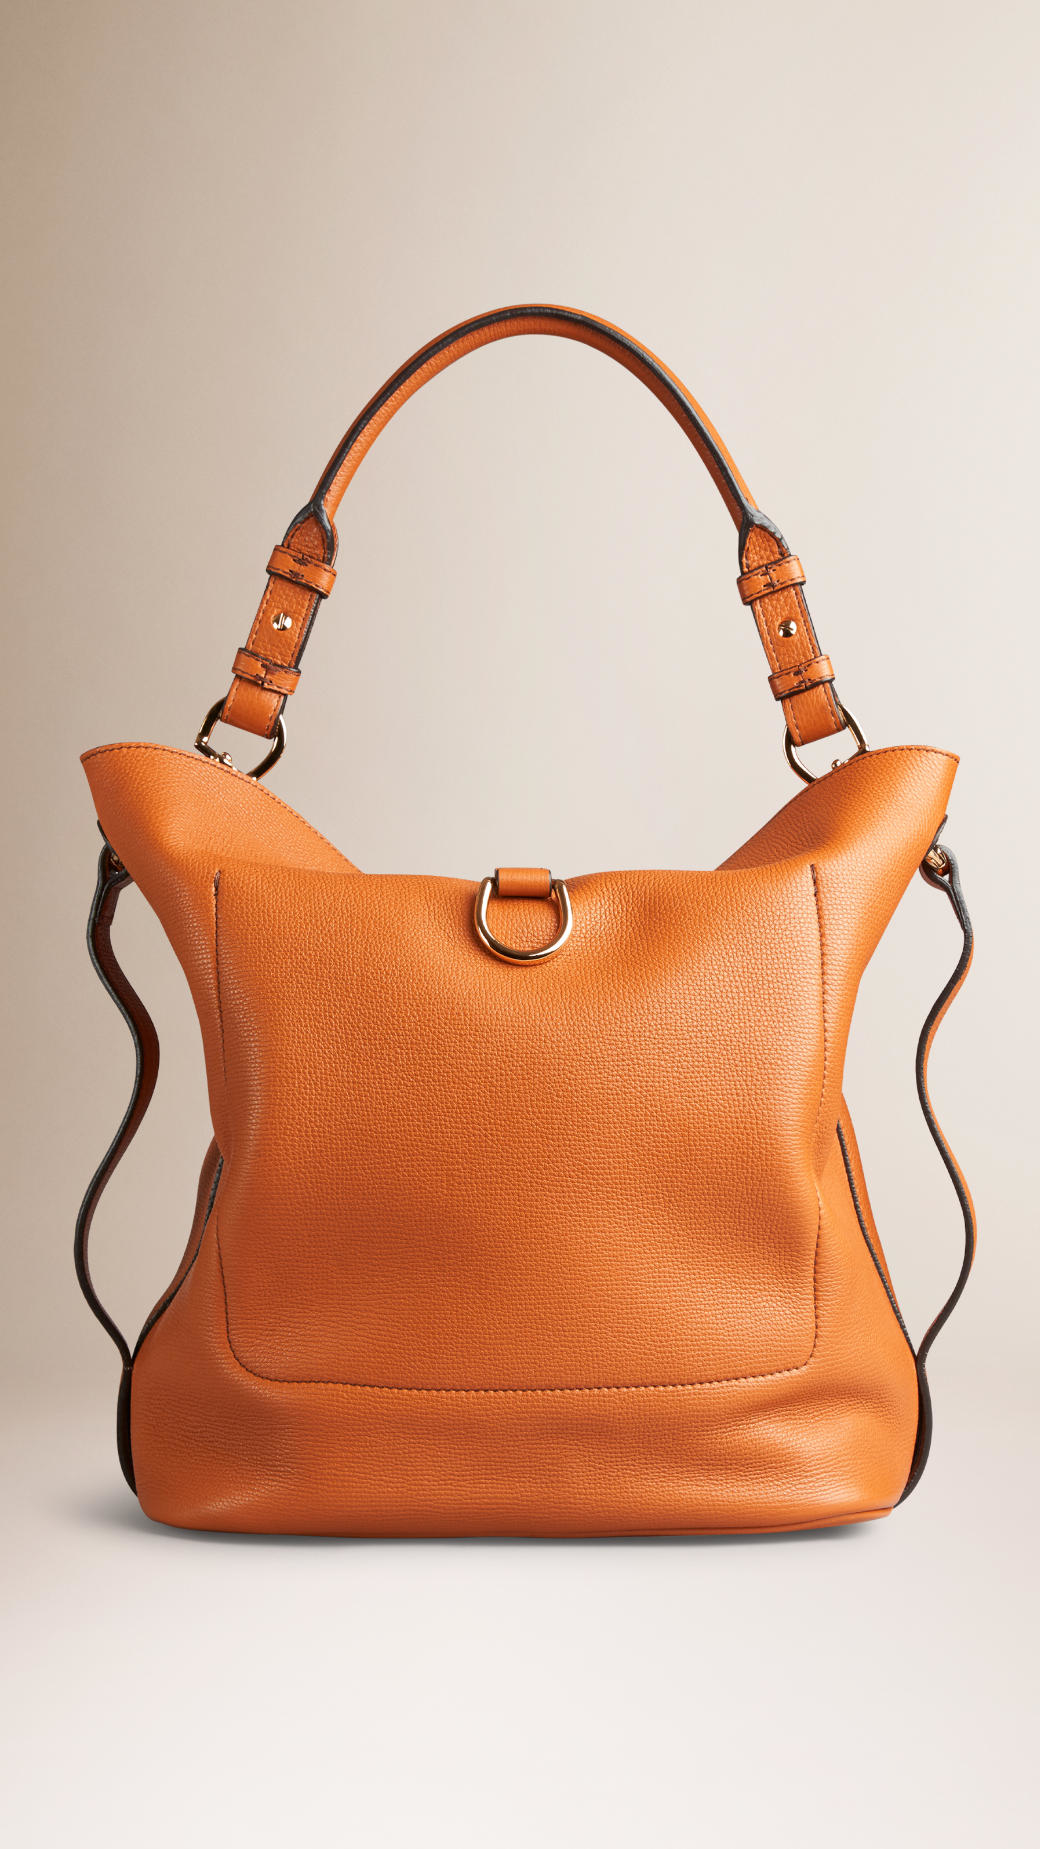 Lyst - Burberry Medium Buckle Detail Leather Hobo Bag in Brown